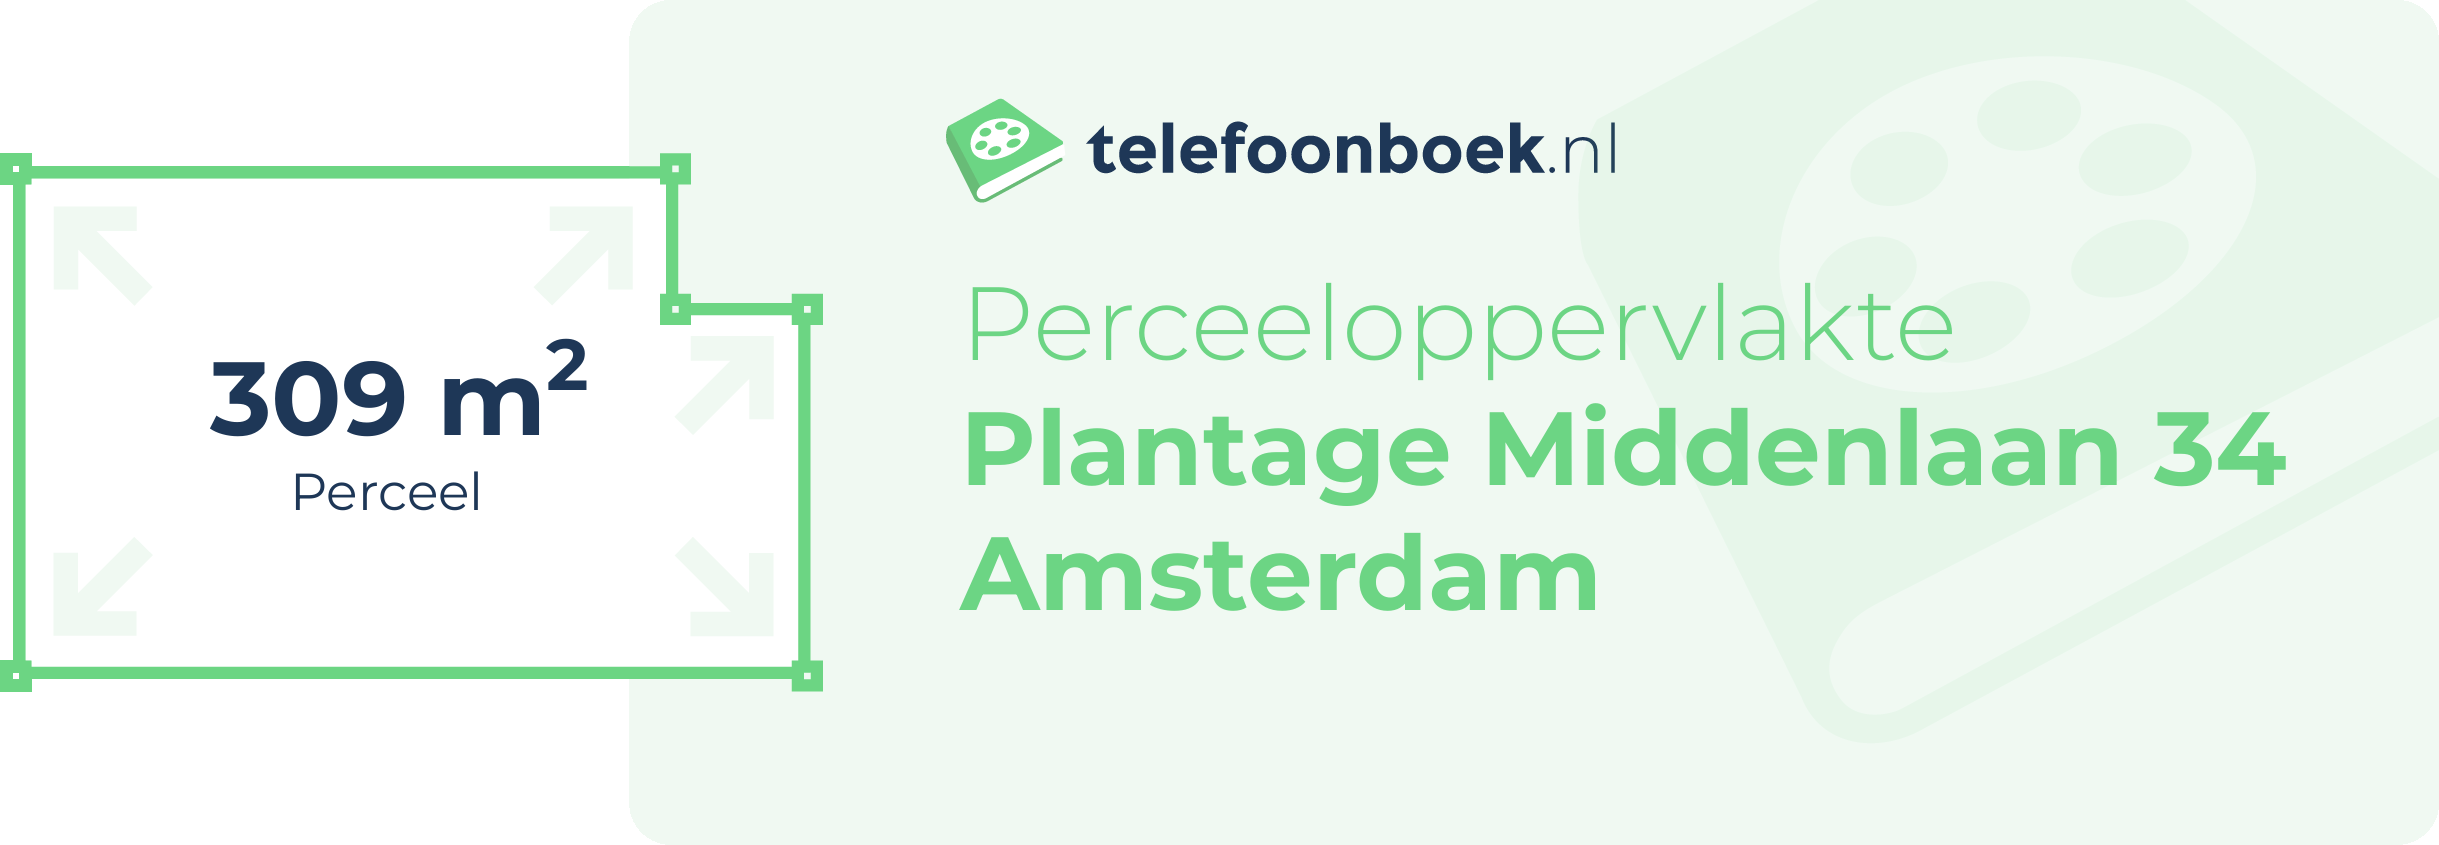 Perceeloppervlakte Plantage Middenlaan 34 Amsterdam